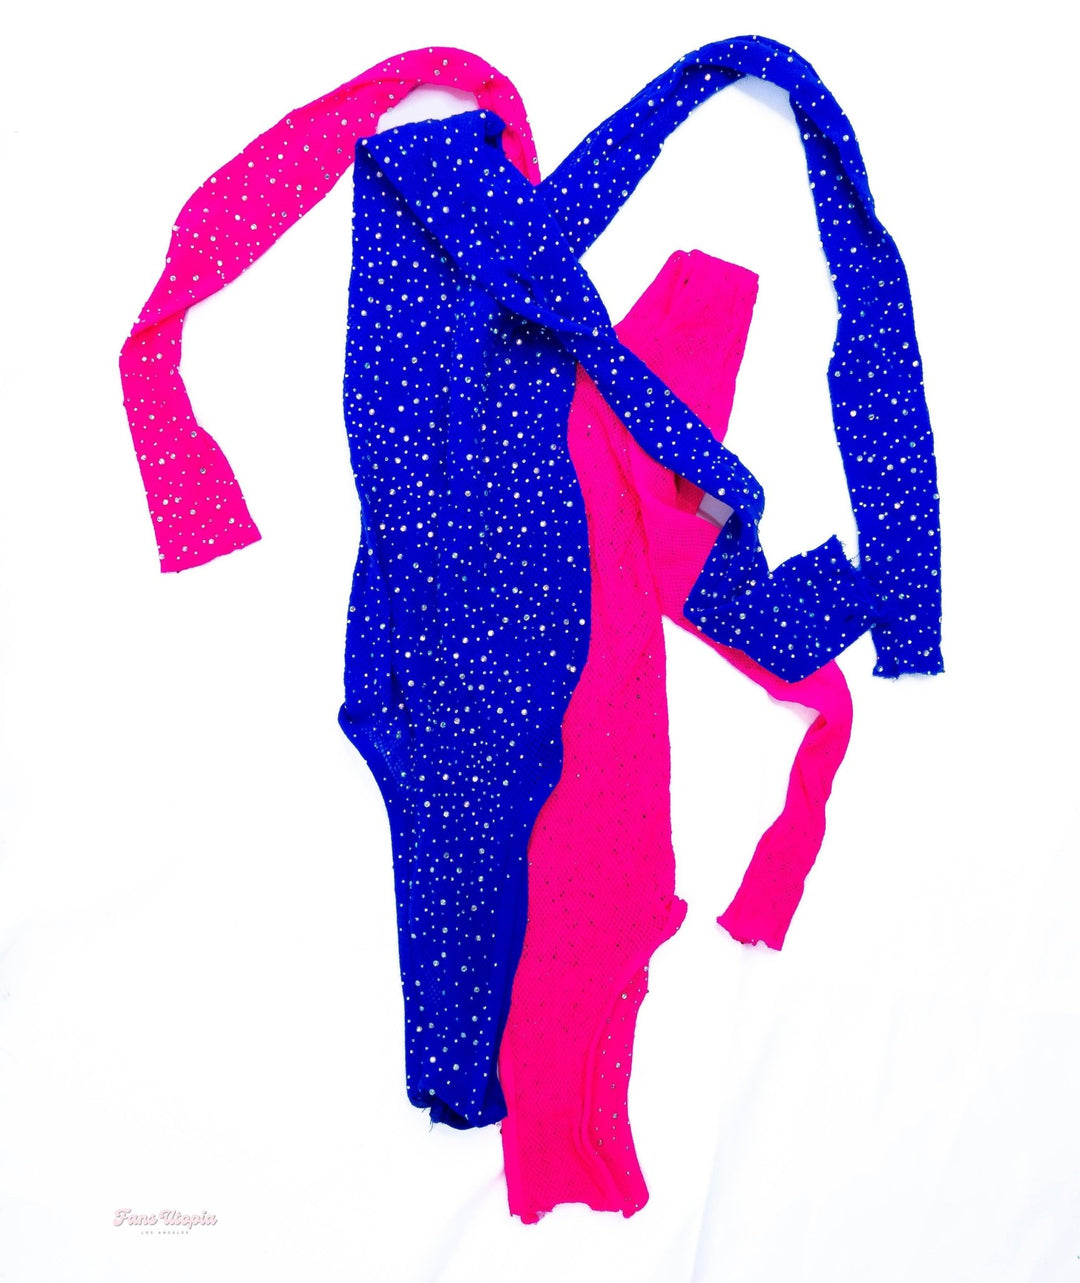 Riley Reid Blue & Hot Pink Mesh Bodysuit - FANS UTOPIA